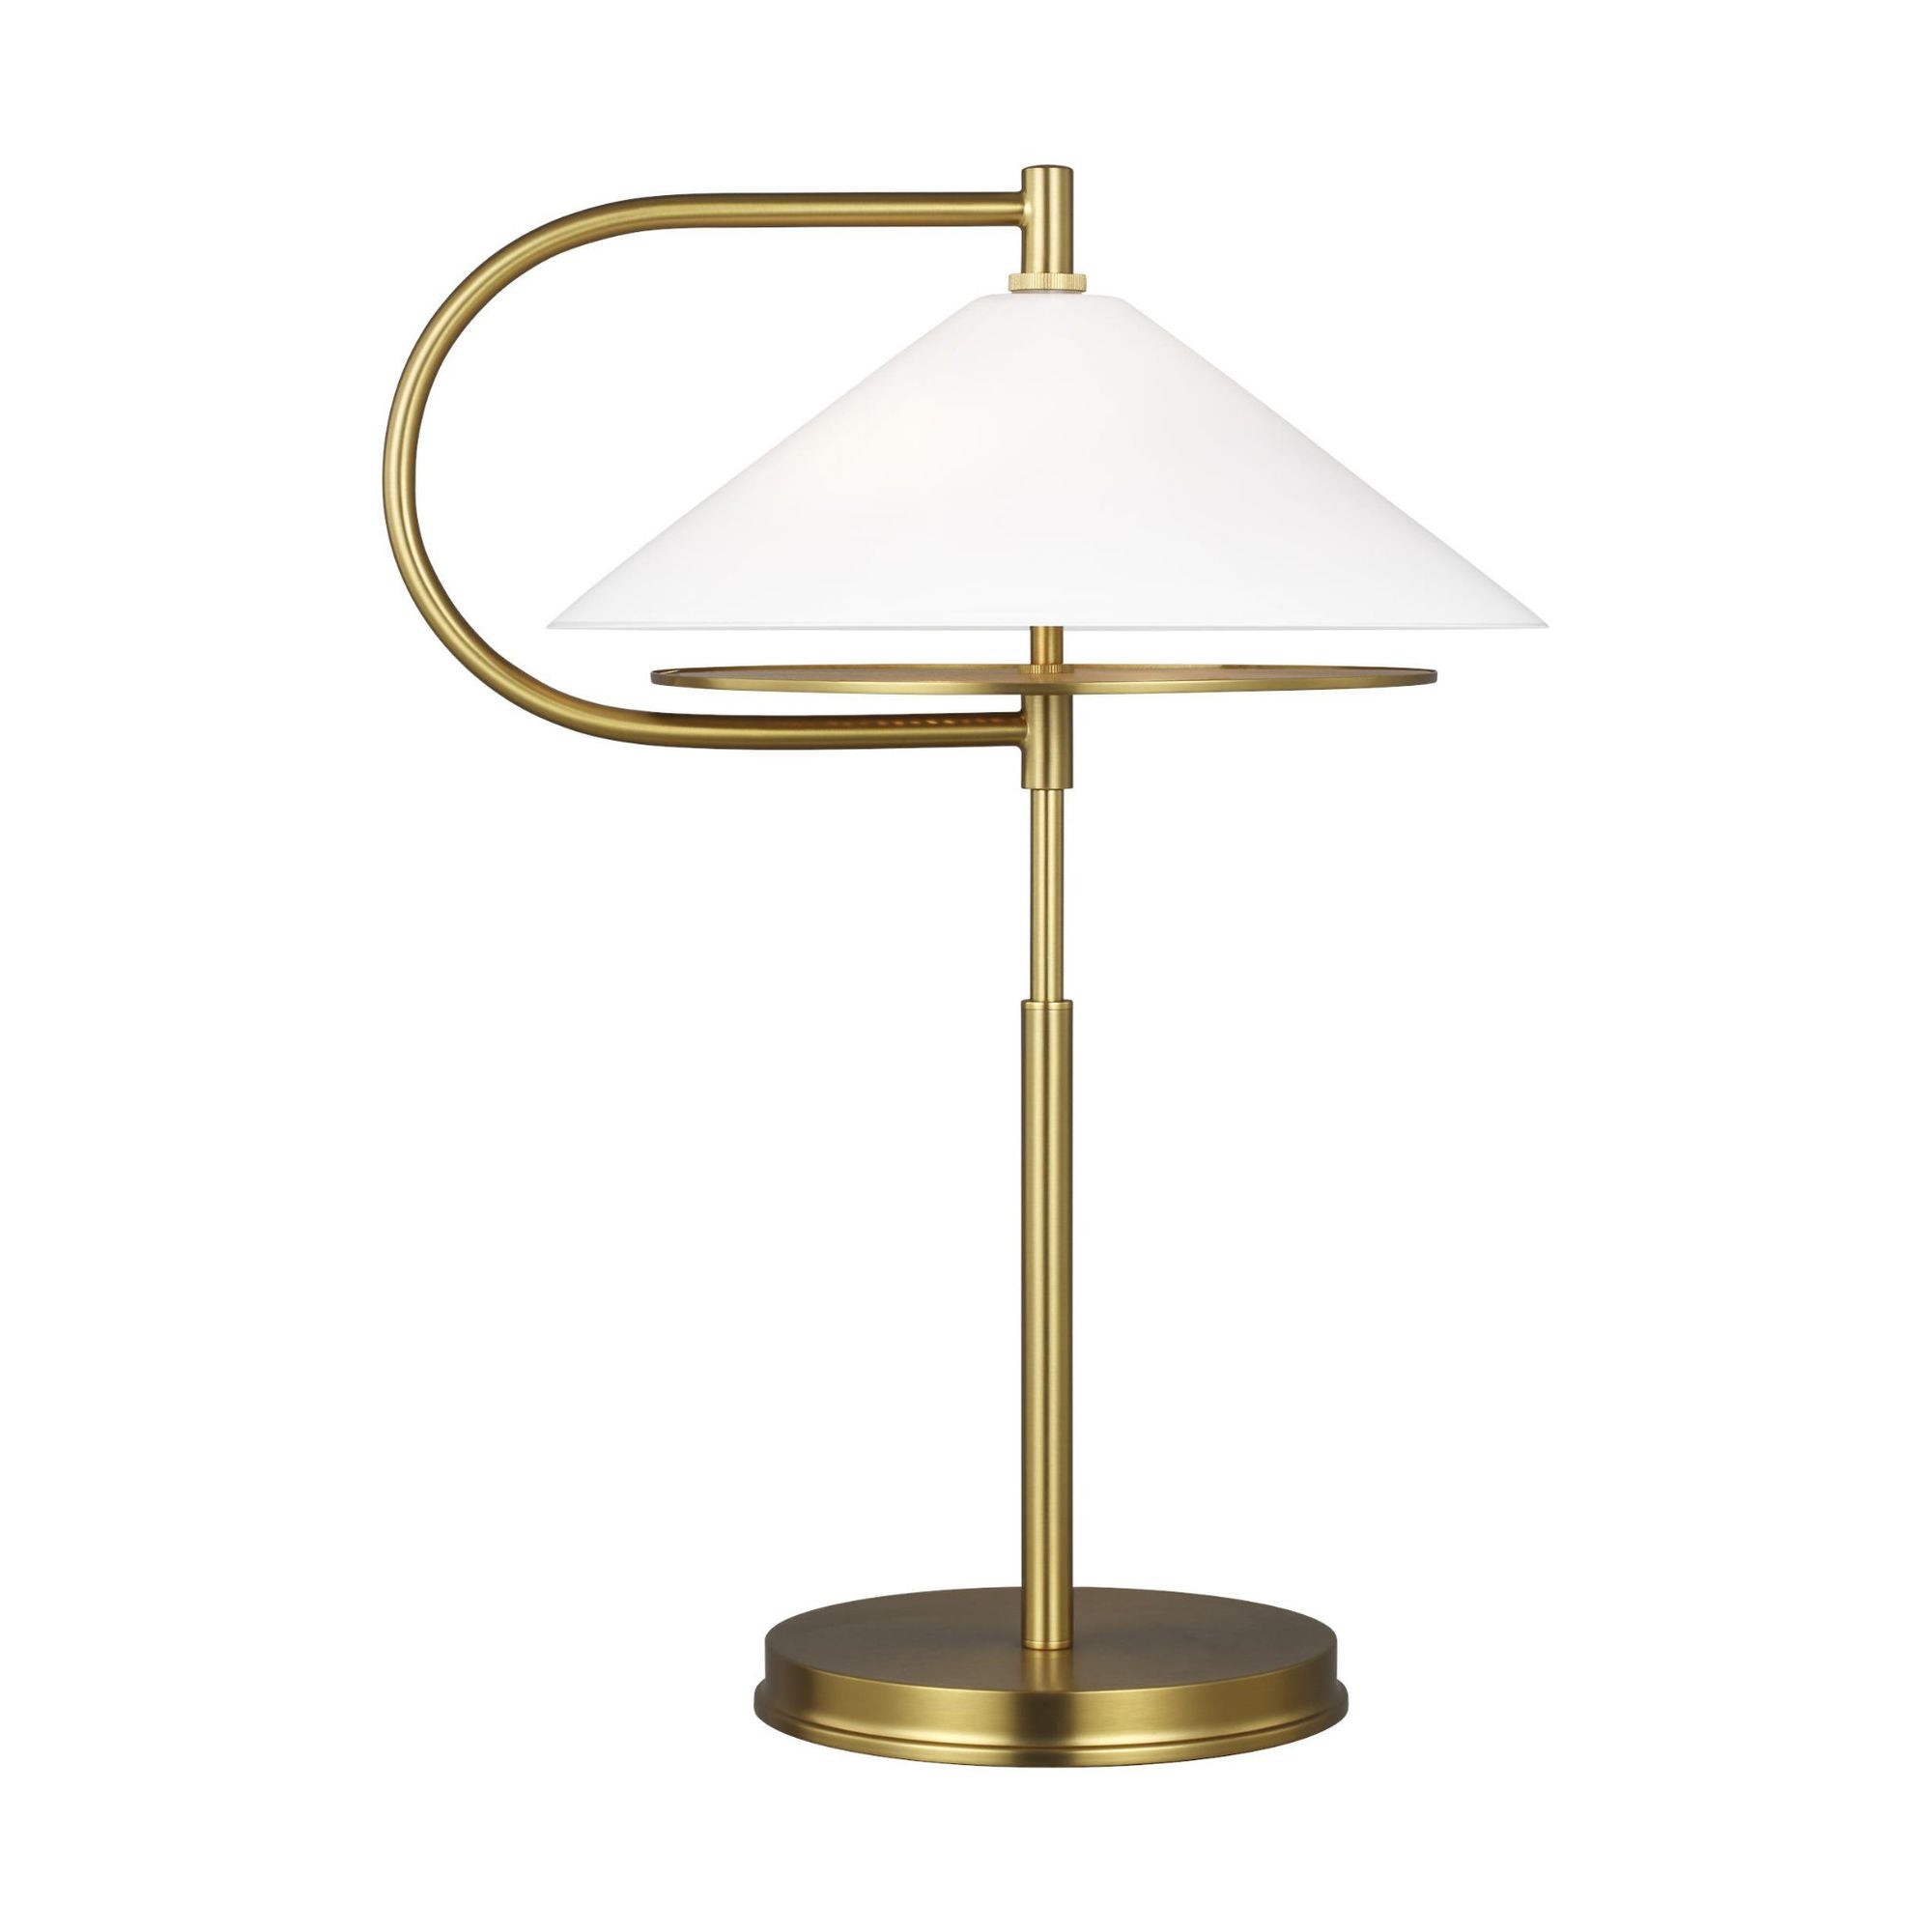 Kelly Wearstler Gesture Table Lamp in Burnished Brass